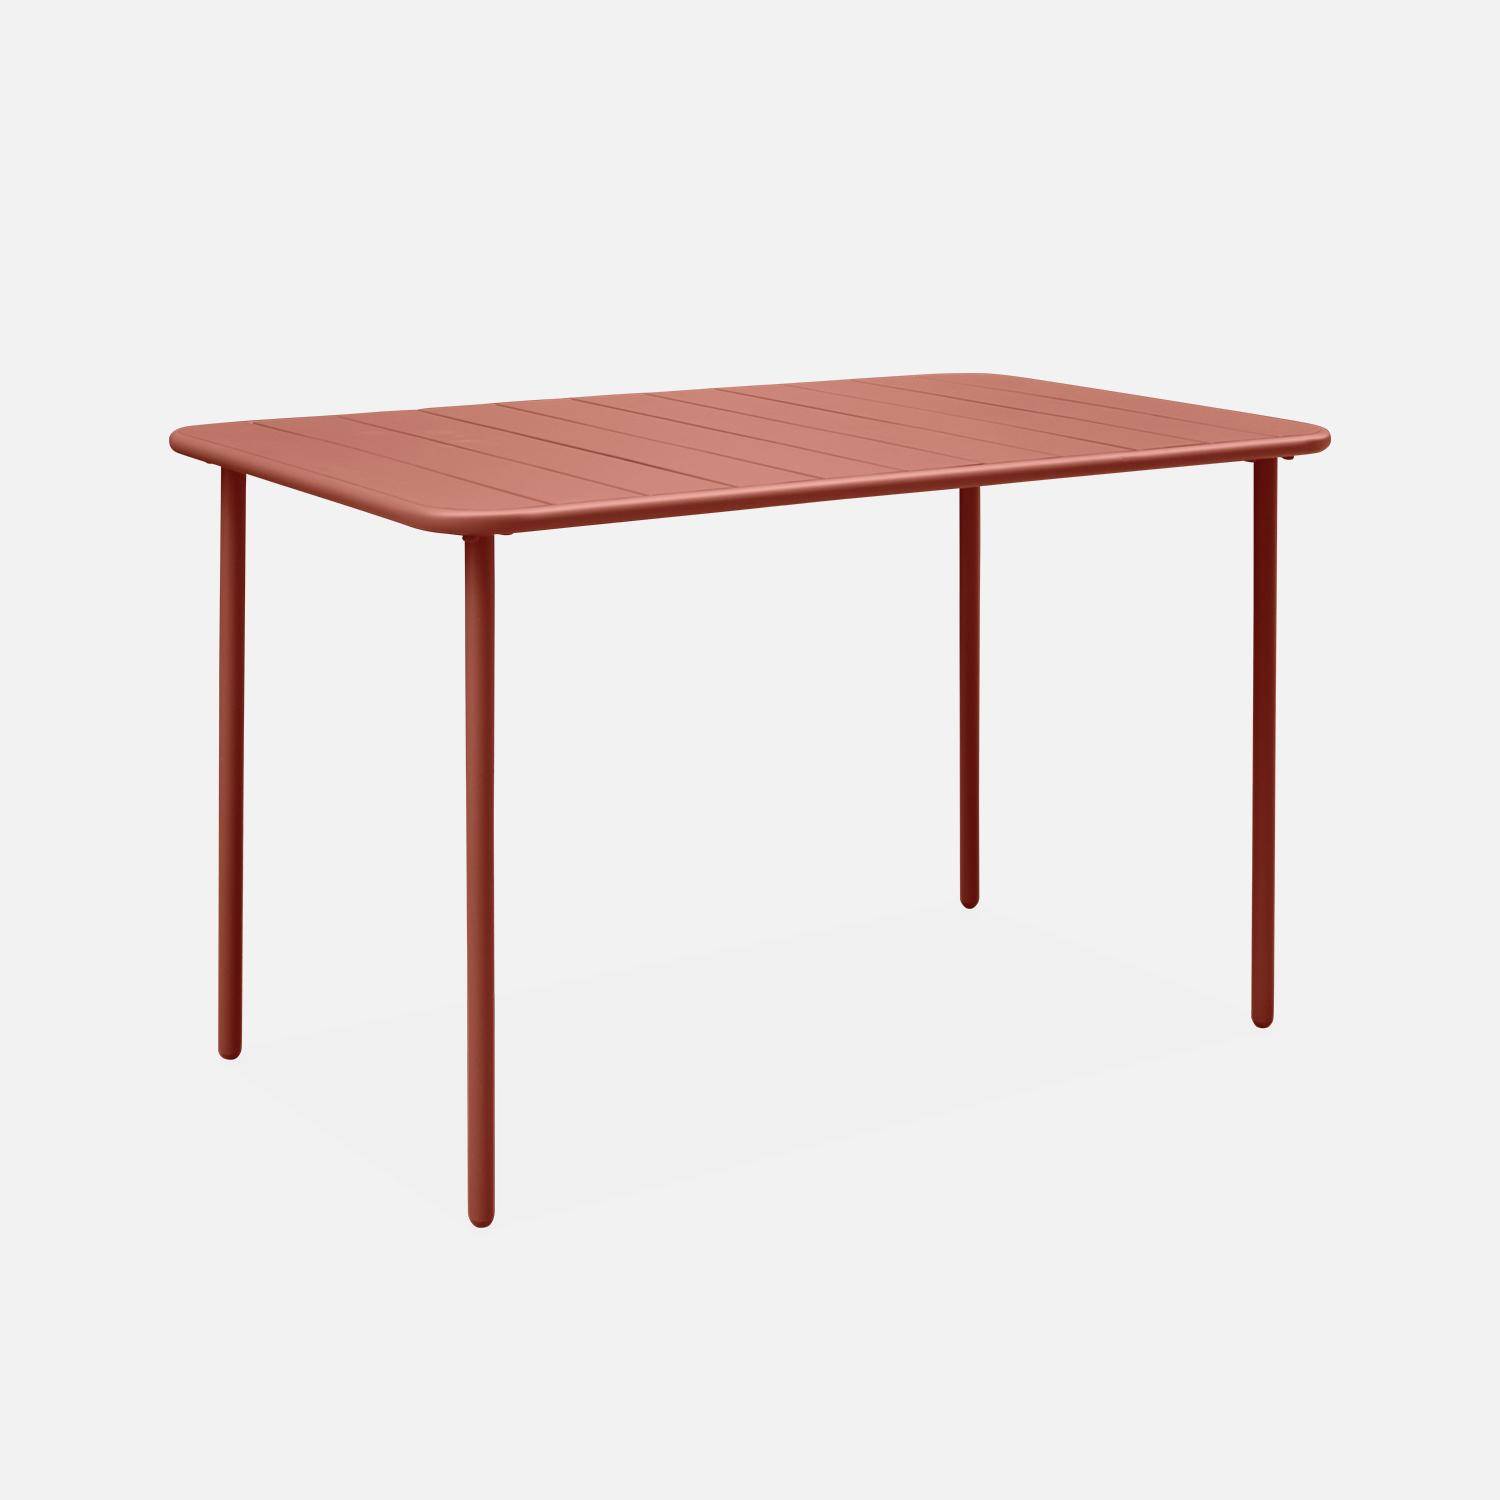 4-seater rectangular steel garden table, 120cm, Terracotta Photo5